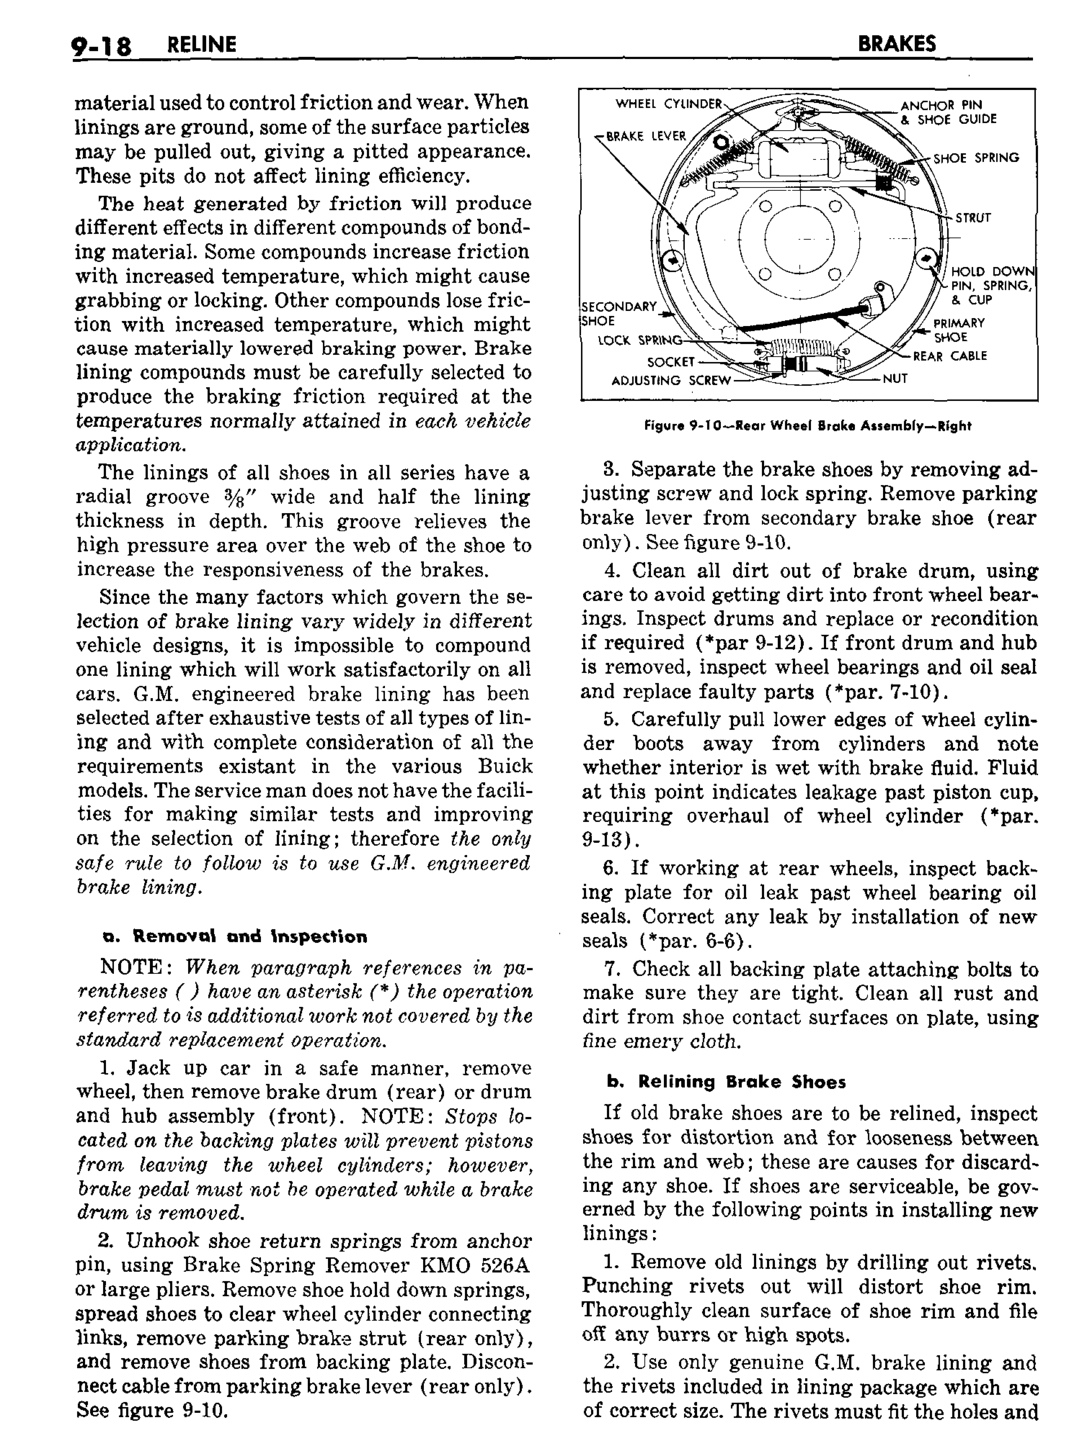 n_10 1959 Buick Shop Manual - Brakes-018-018.jpg